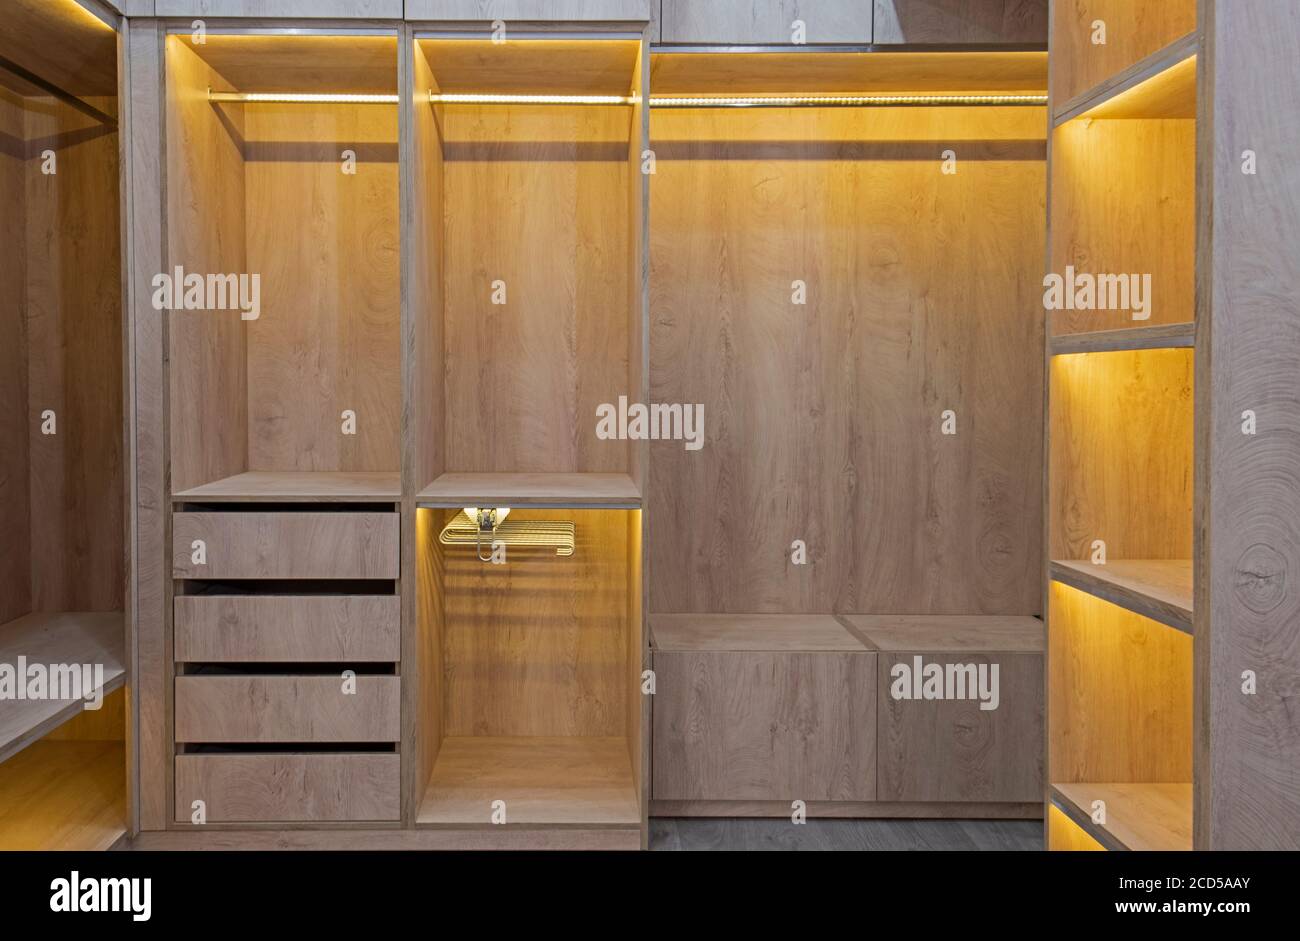 https://c8.alamy.com/comp/2CD5AAY/interior-design-decor-furnishing-of-luxury-show-home-bedroom-showing-walk-in-wooden-wardrobe-closet-furniture-2CD5AAY.jpg